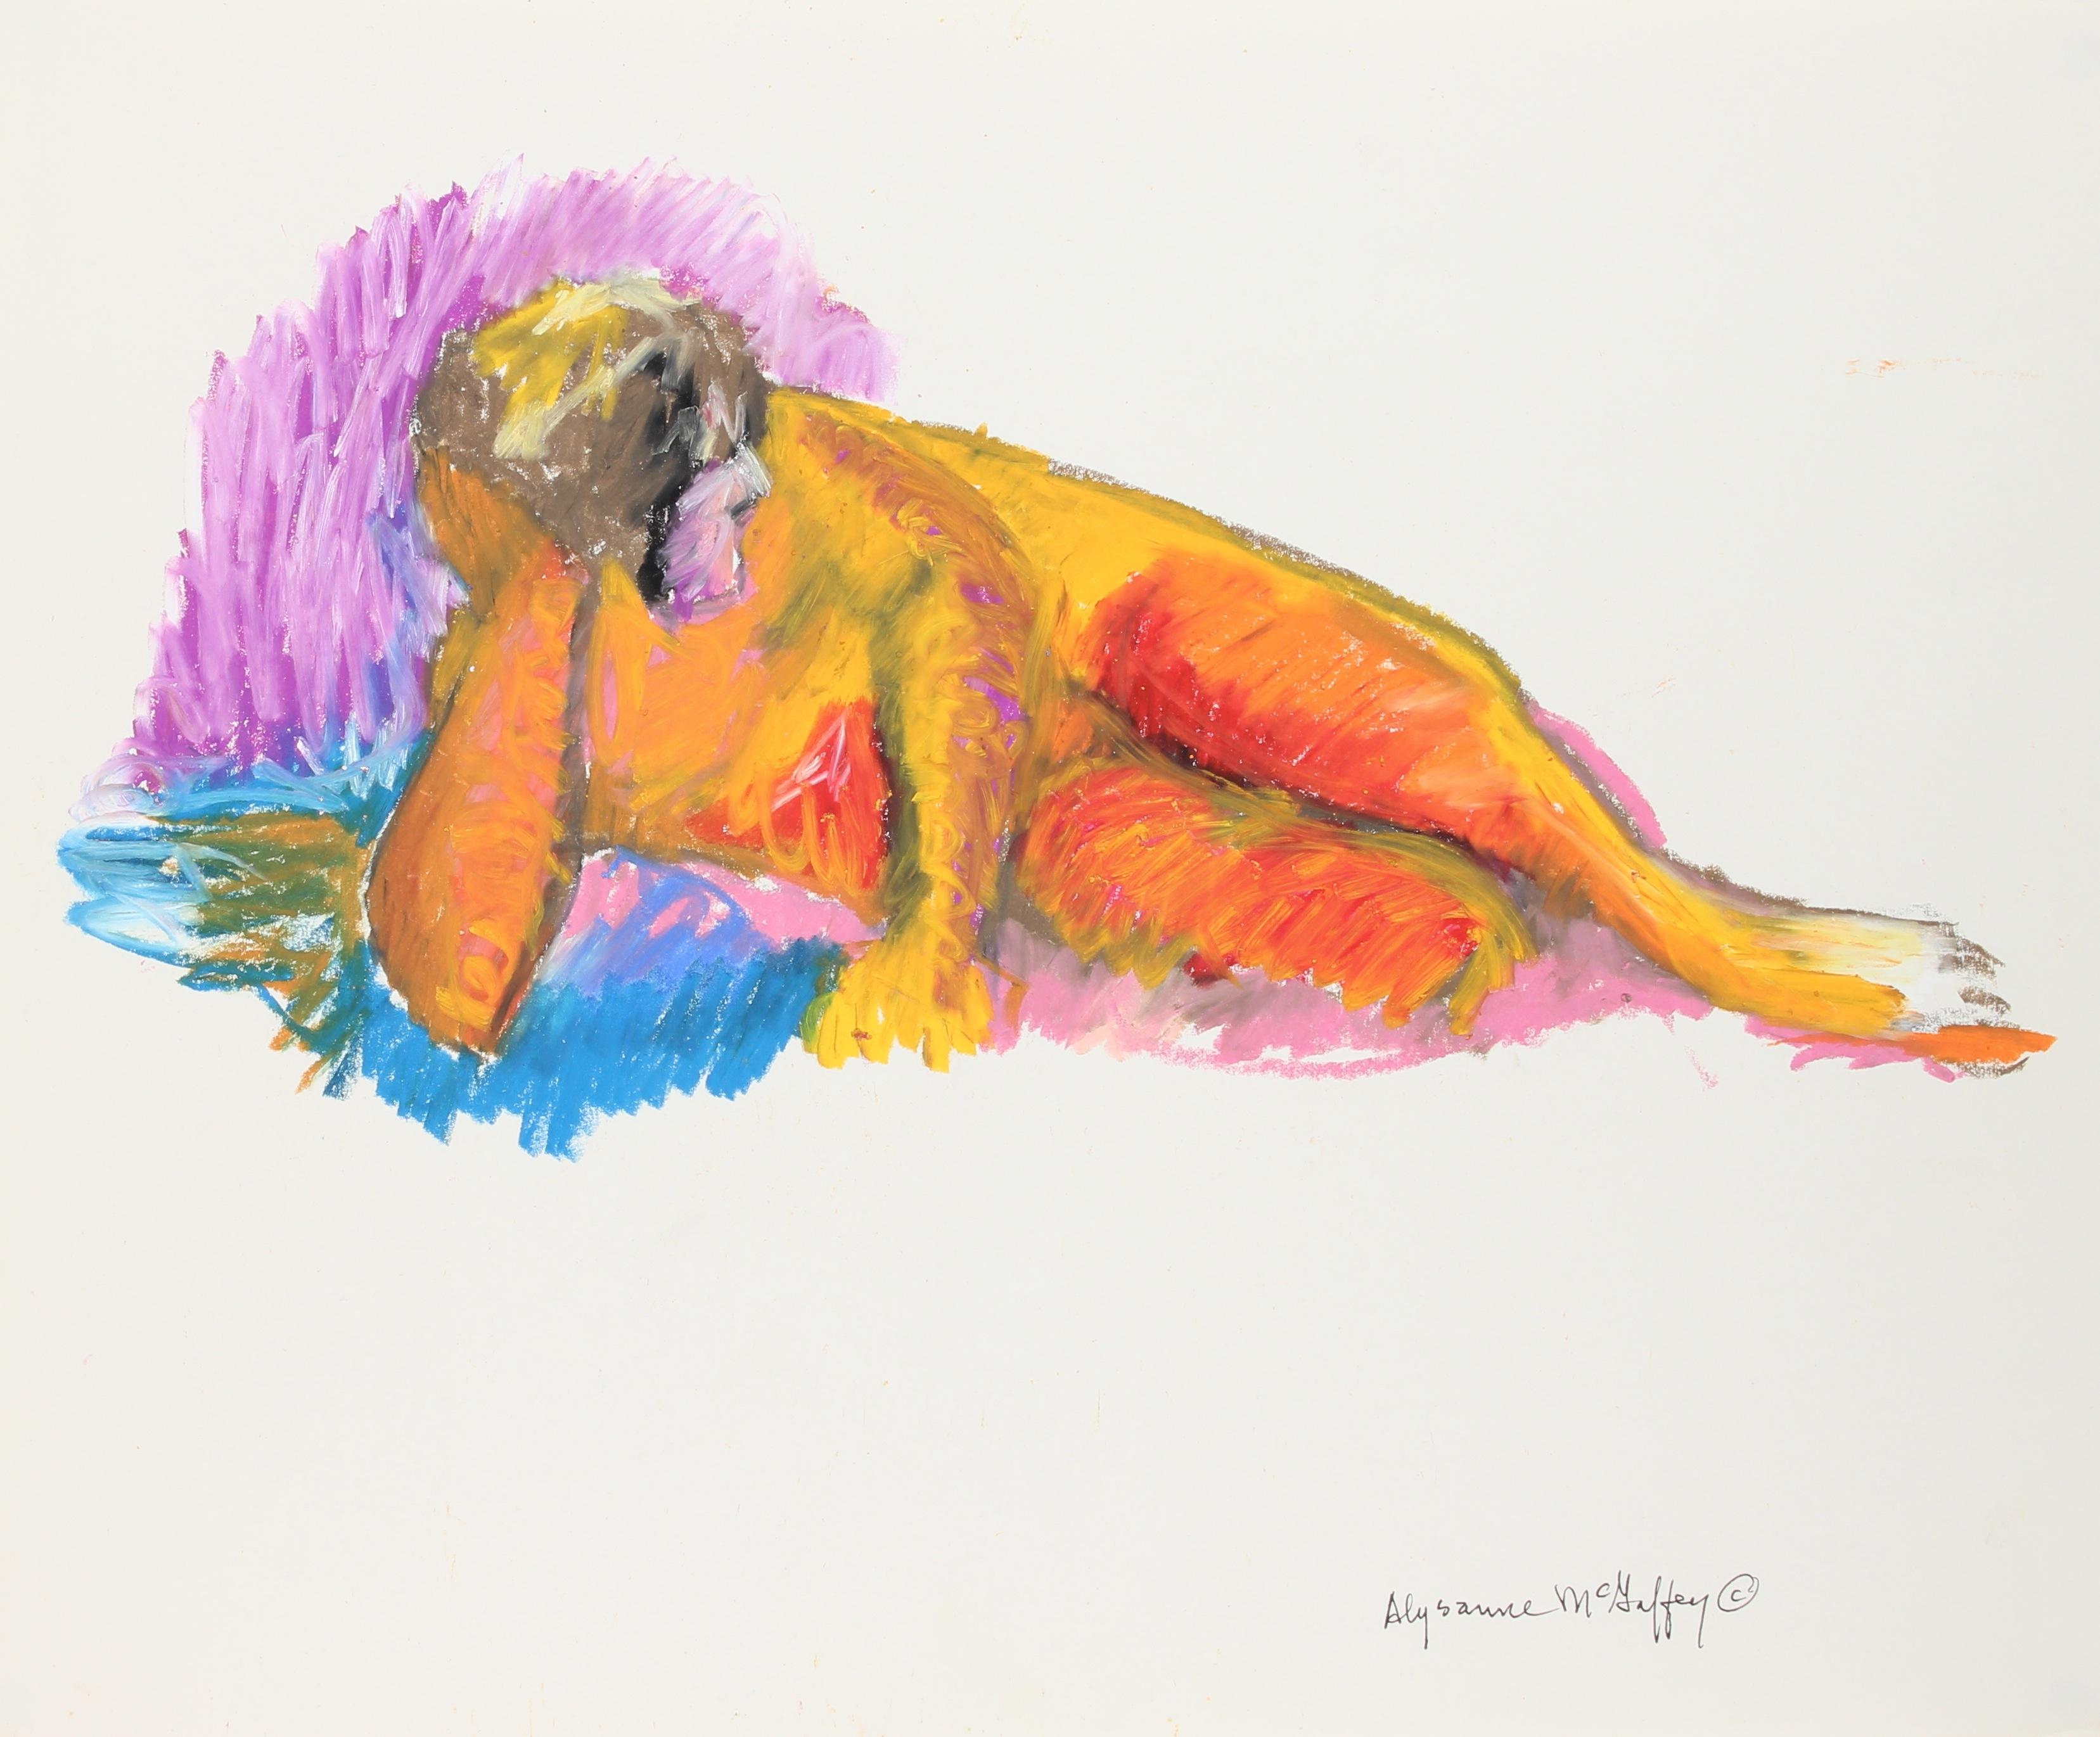 Alysanne McGaffey Nude - Colorful Bay Area Figurative Painting, Circa 1950s- 1960s